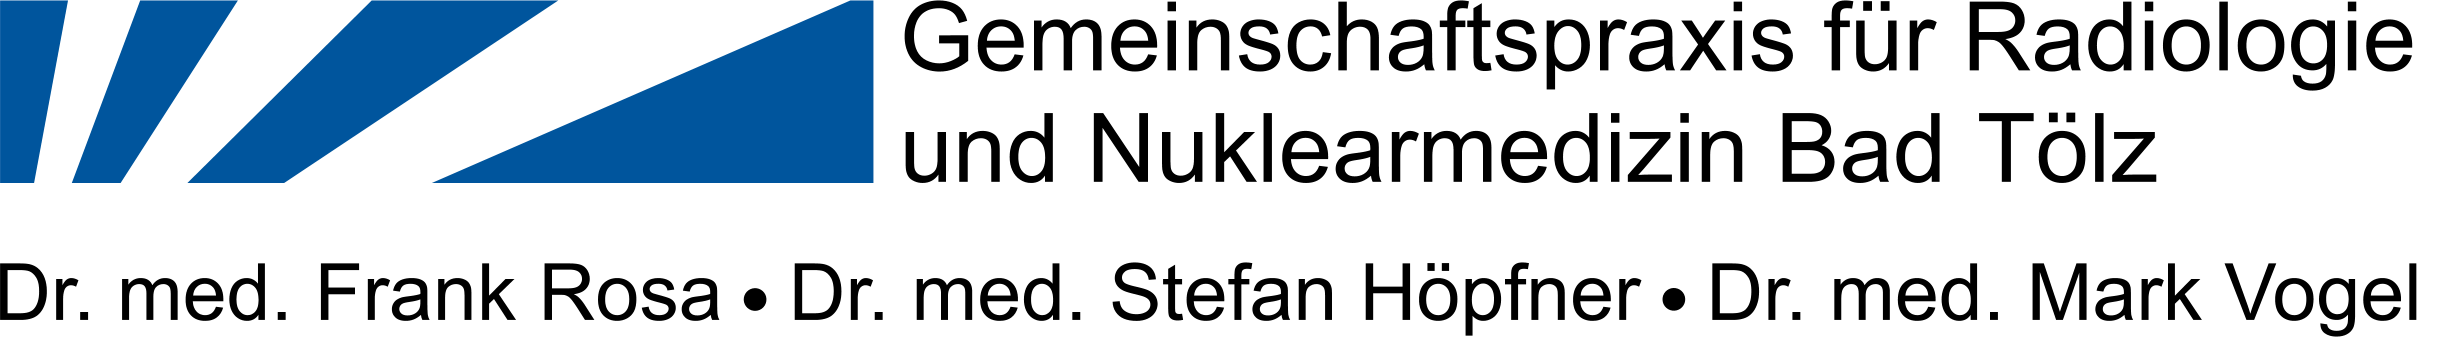 Logo Kopfzeile 3